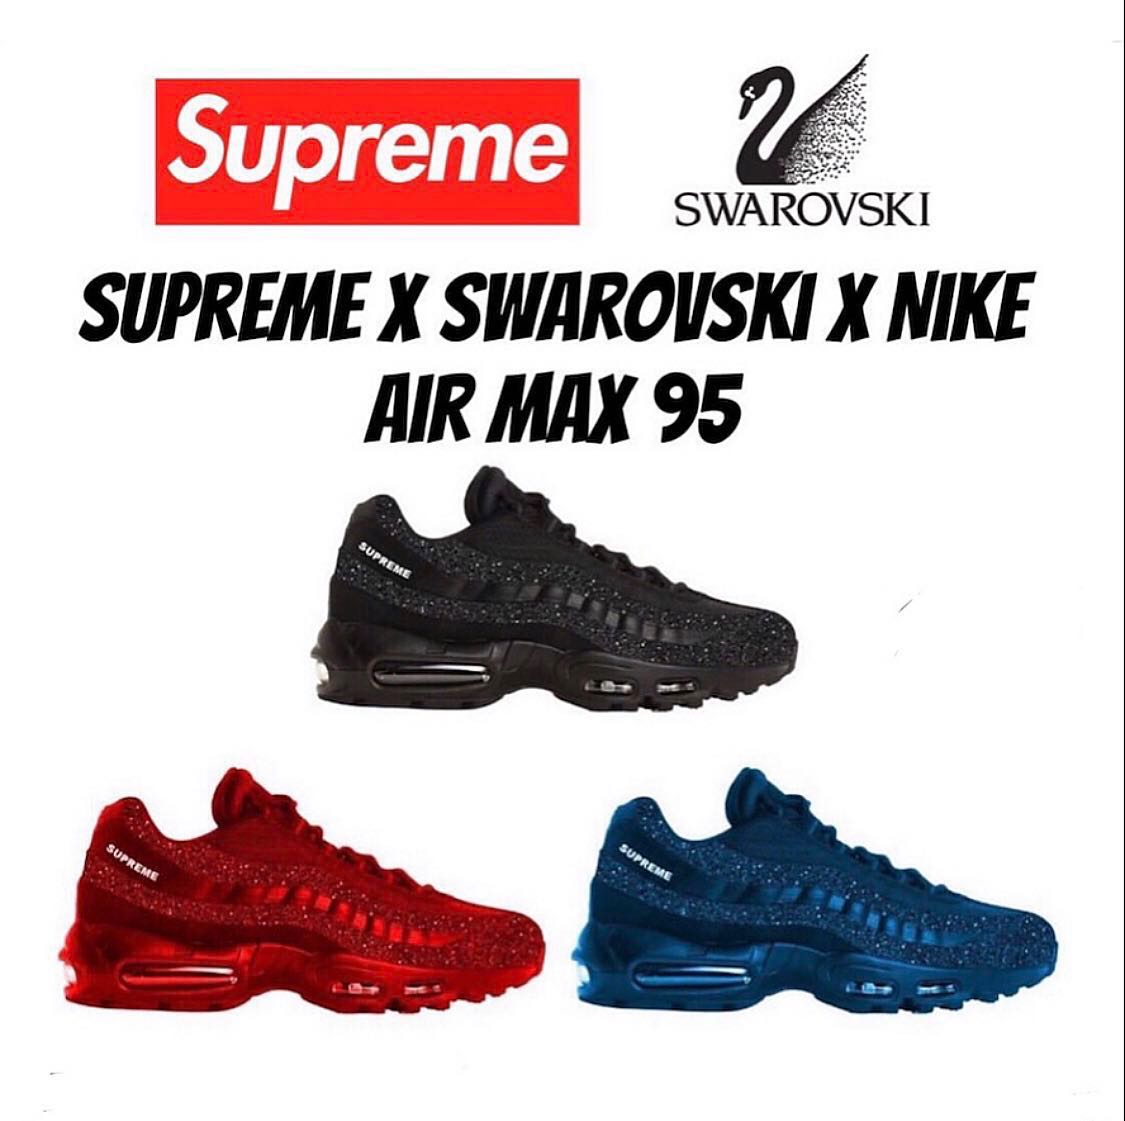 supreme swarovski air max 95